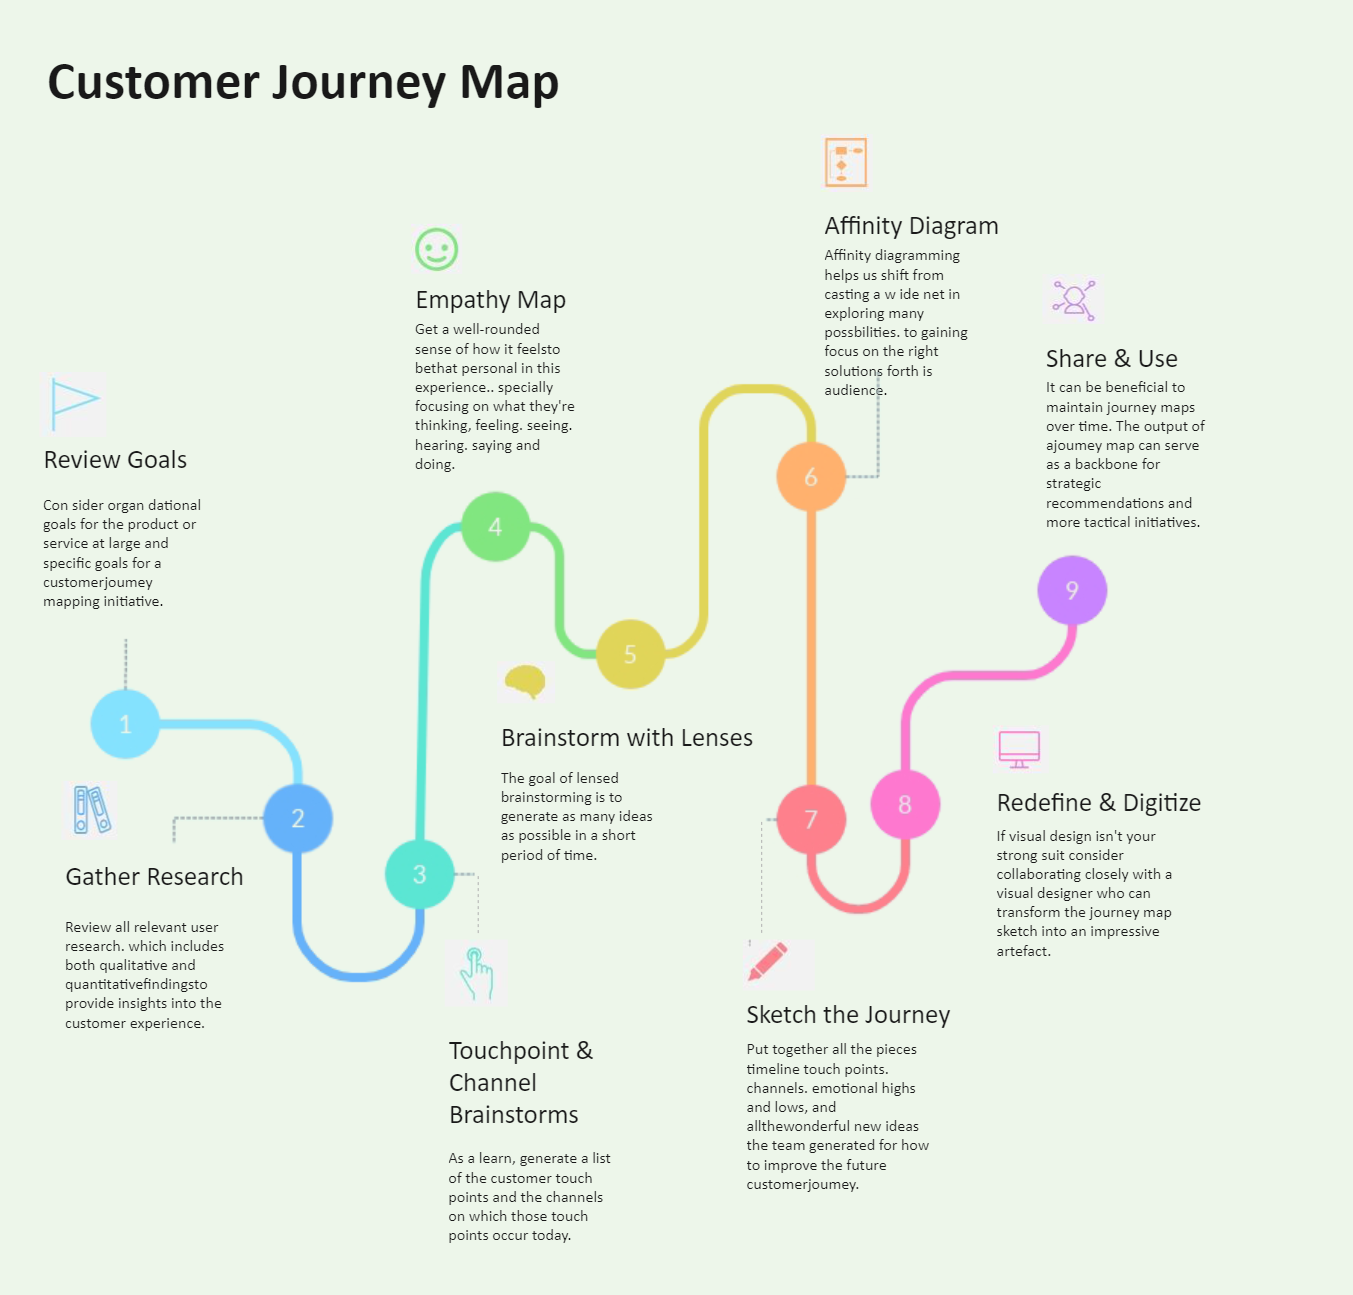 Customer Journey Map Component